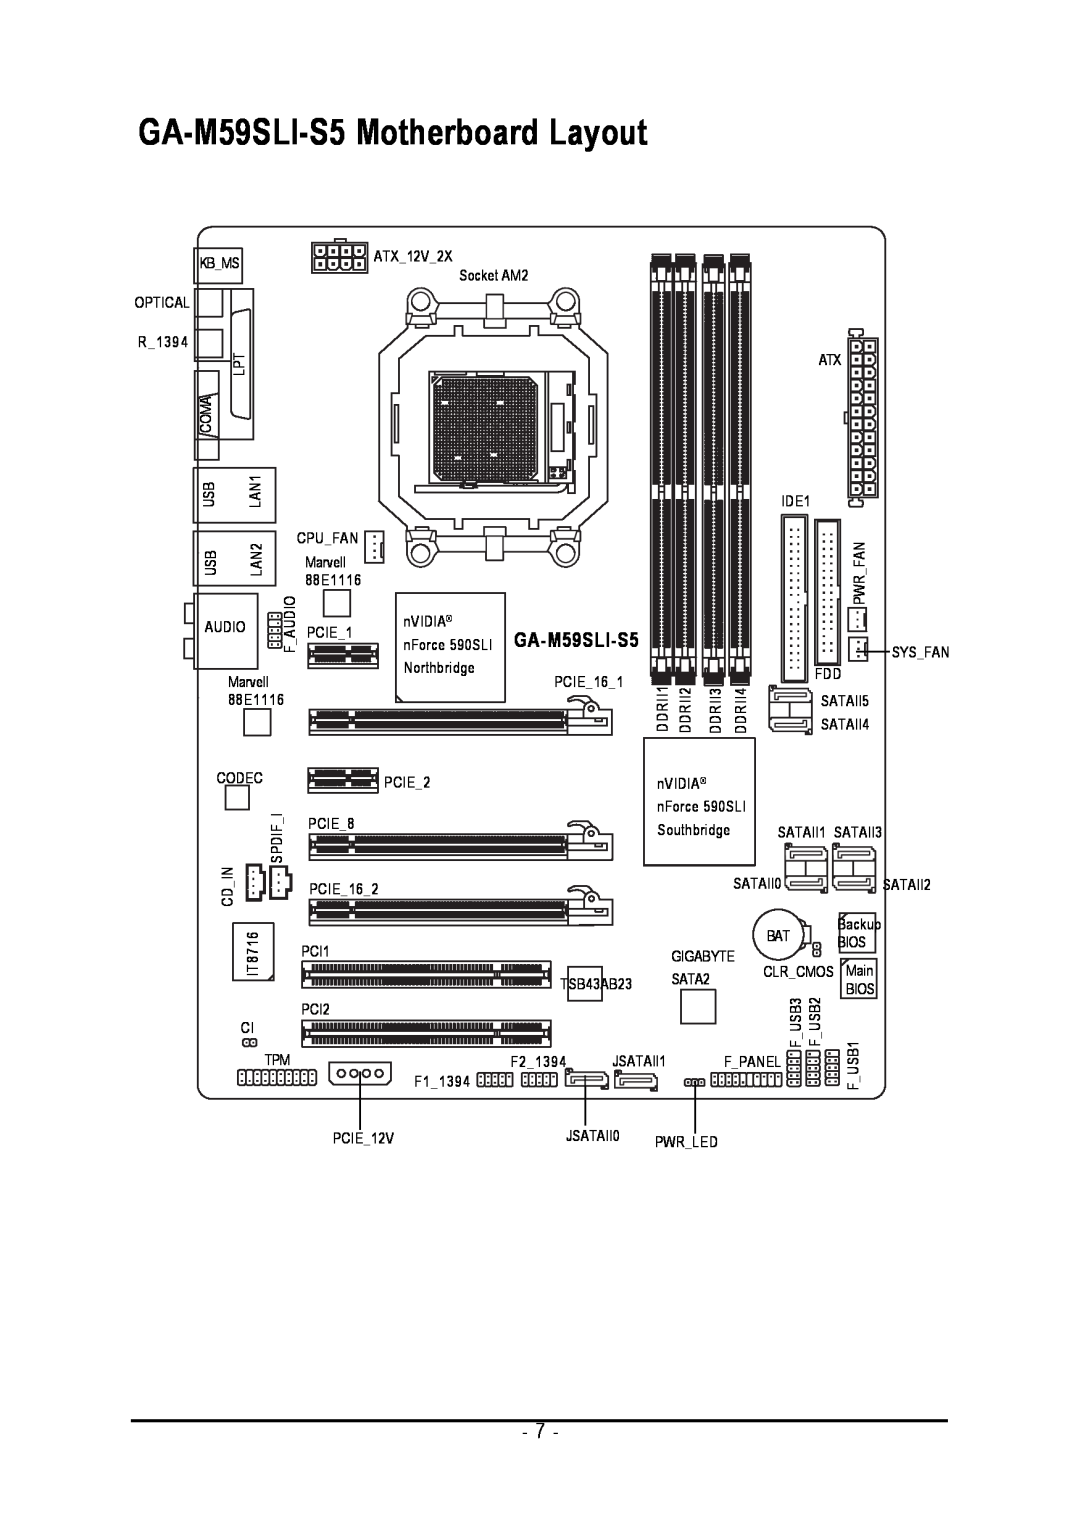 Gigabyte GA-M59SLI-S4 user manual GA-M59SLI-S5 Motherboard Layout, DDRII3 DDRII4, CLRCMOS Main 